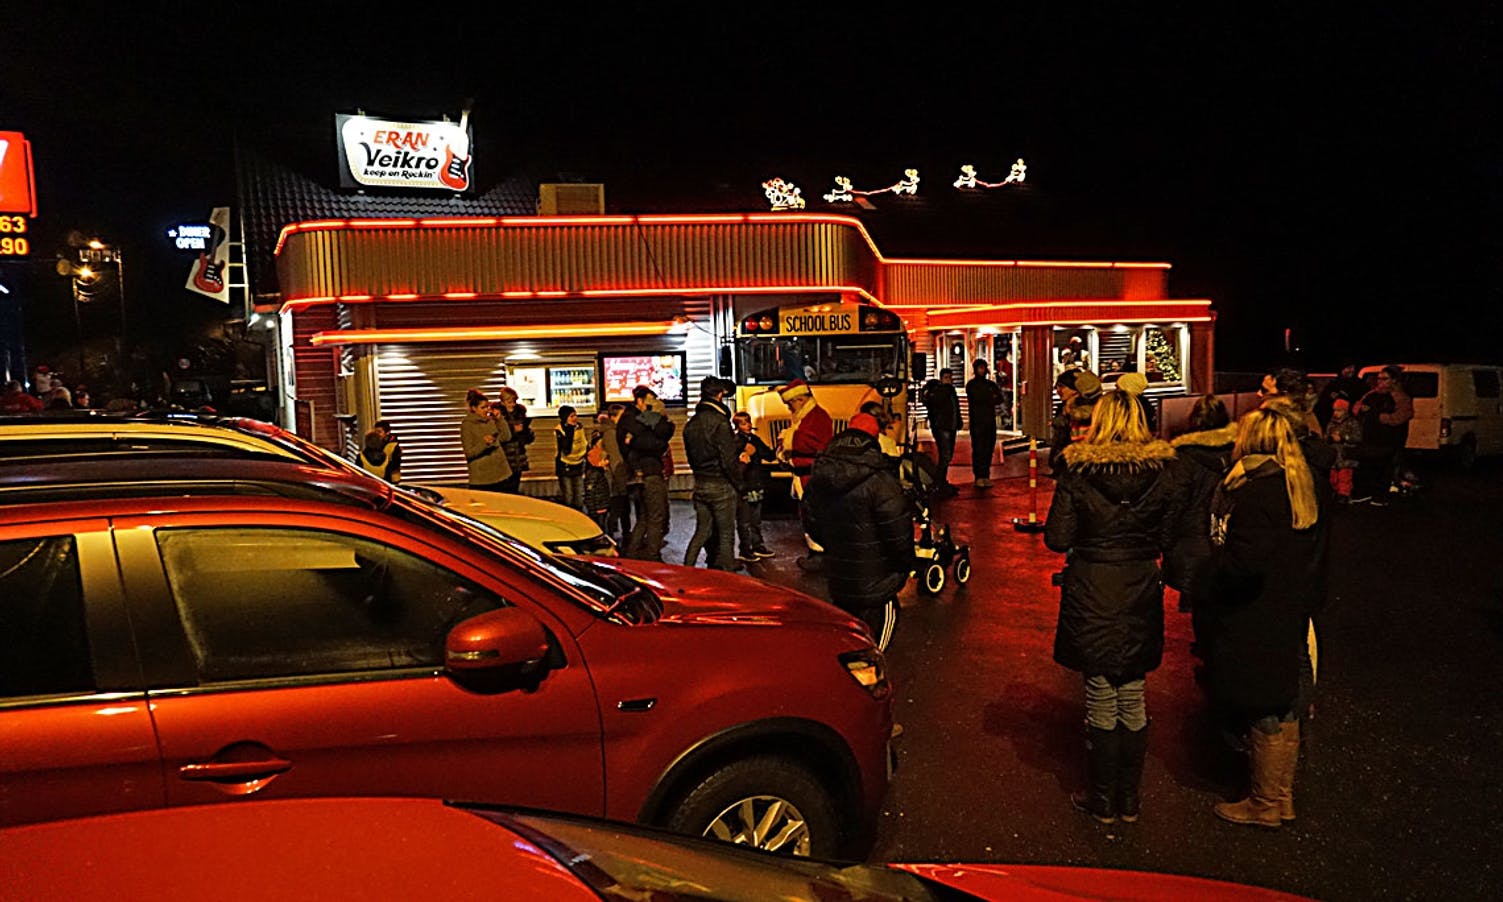 Mykje folk hadde samla seg på Røykenes i kveld.  (Foto: KOG)